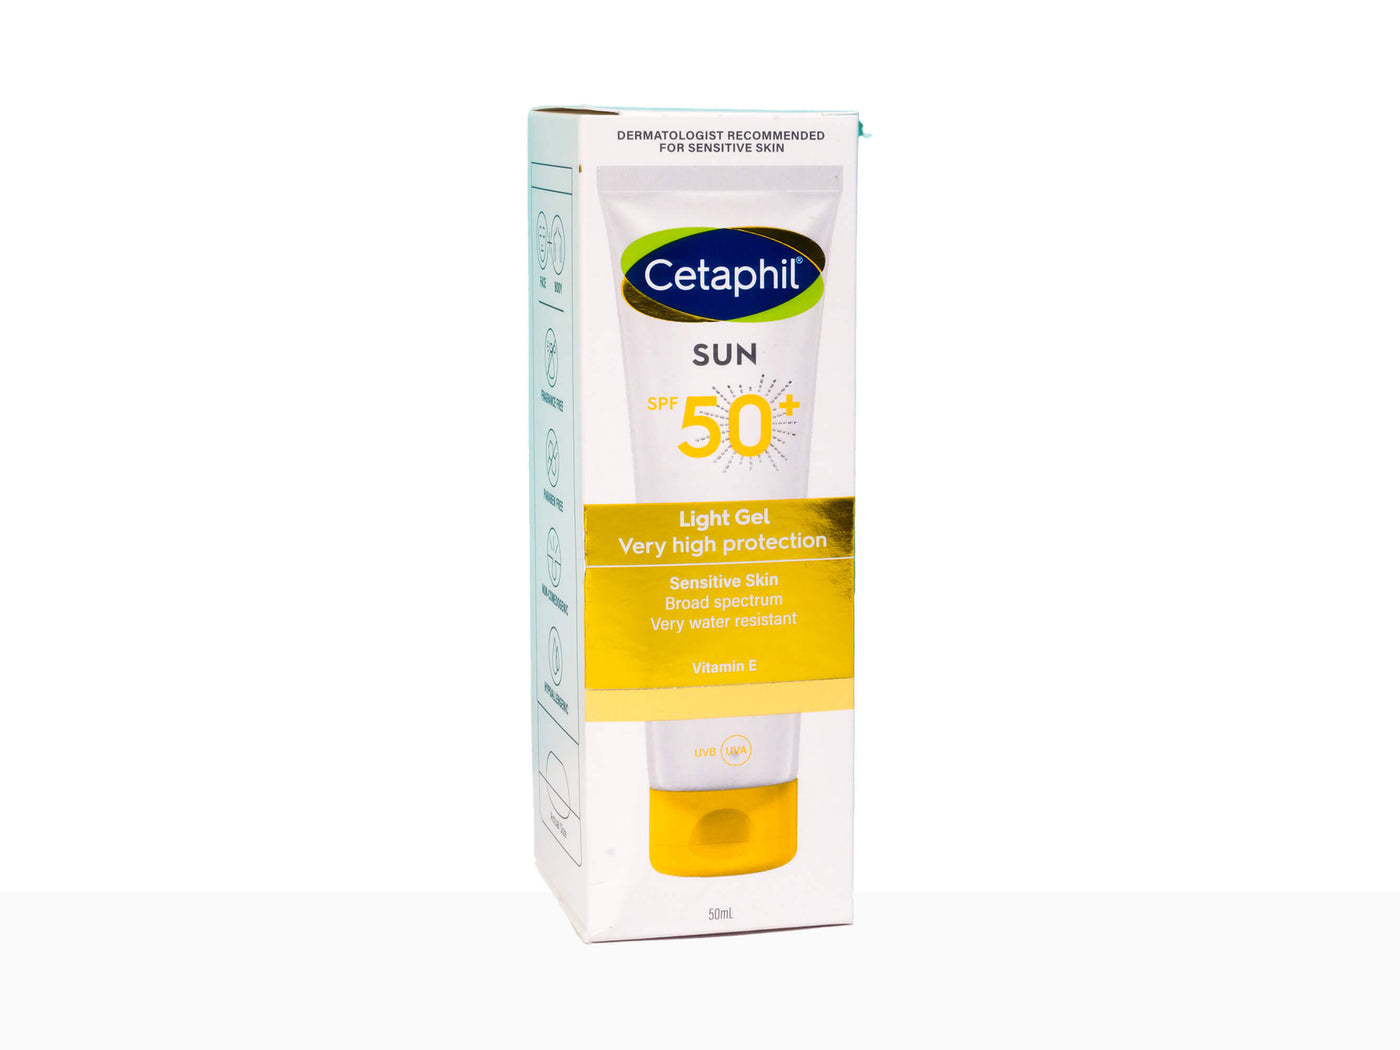 Cetaphil sun light gel SPF 50+(very high protection for sensitive skin) - Clinikally